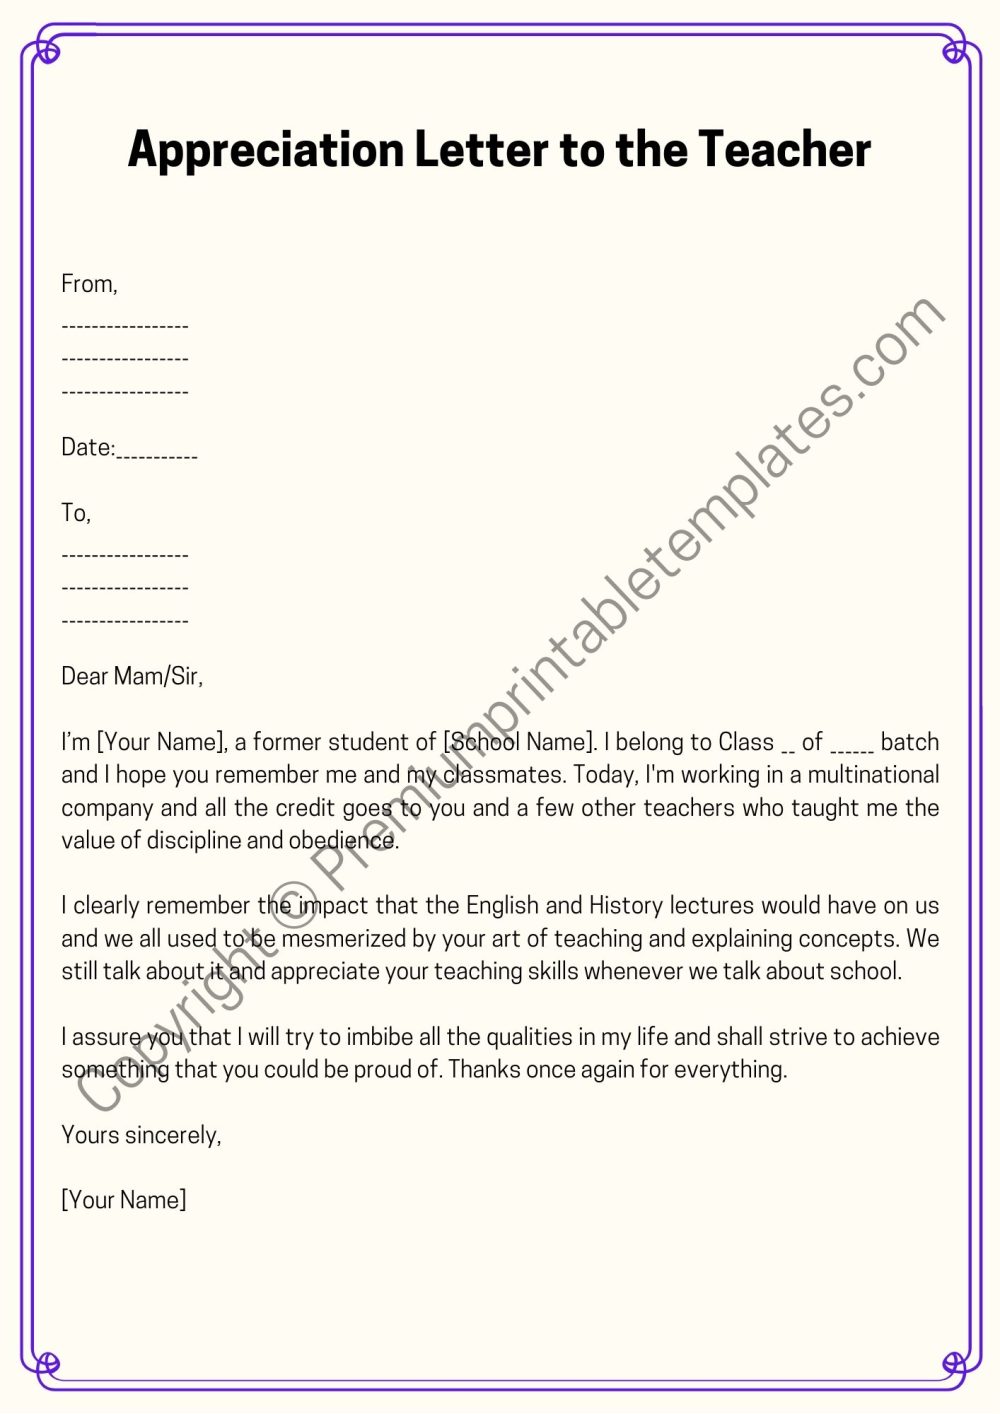 Appreciation Letter to the Teacher Template